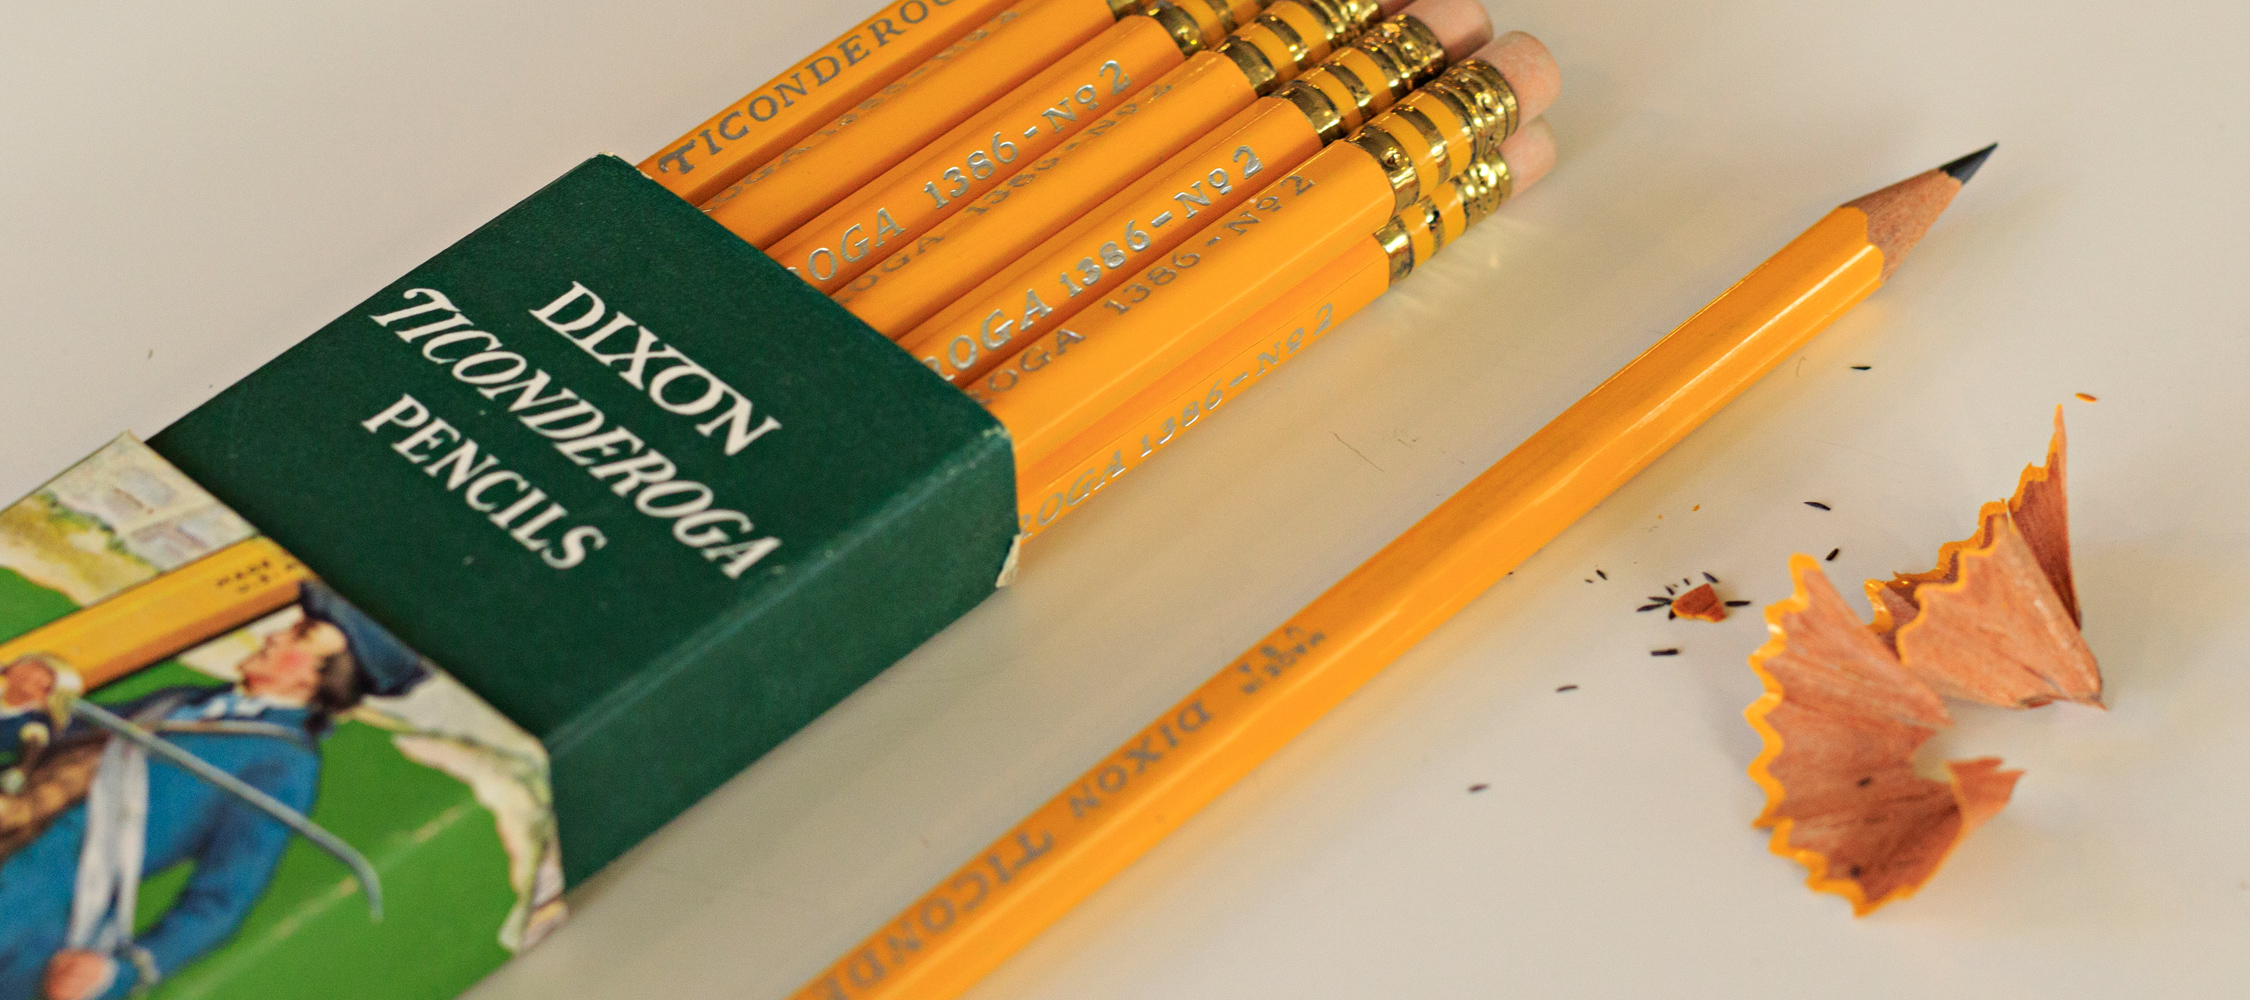 Dixon Ticonderoga Box with Pencils